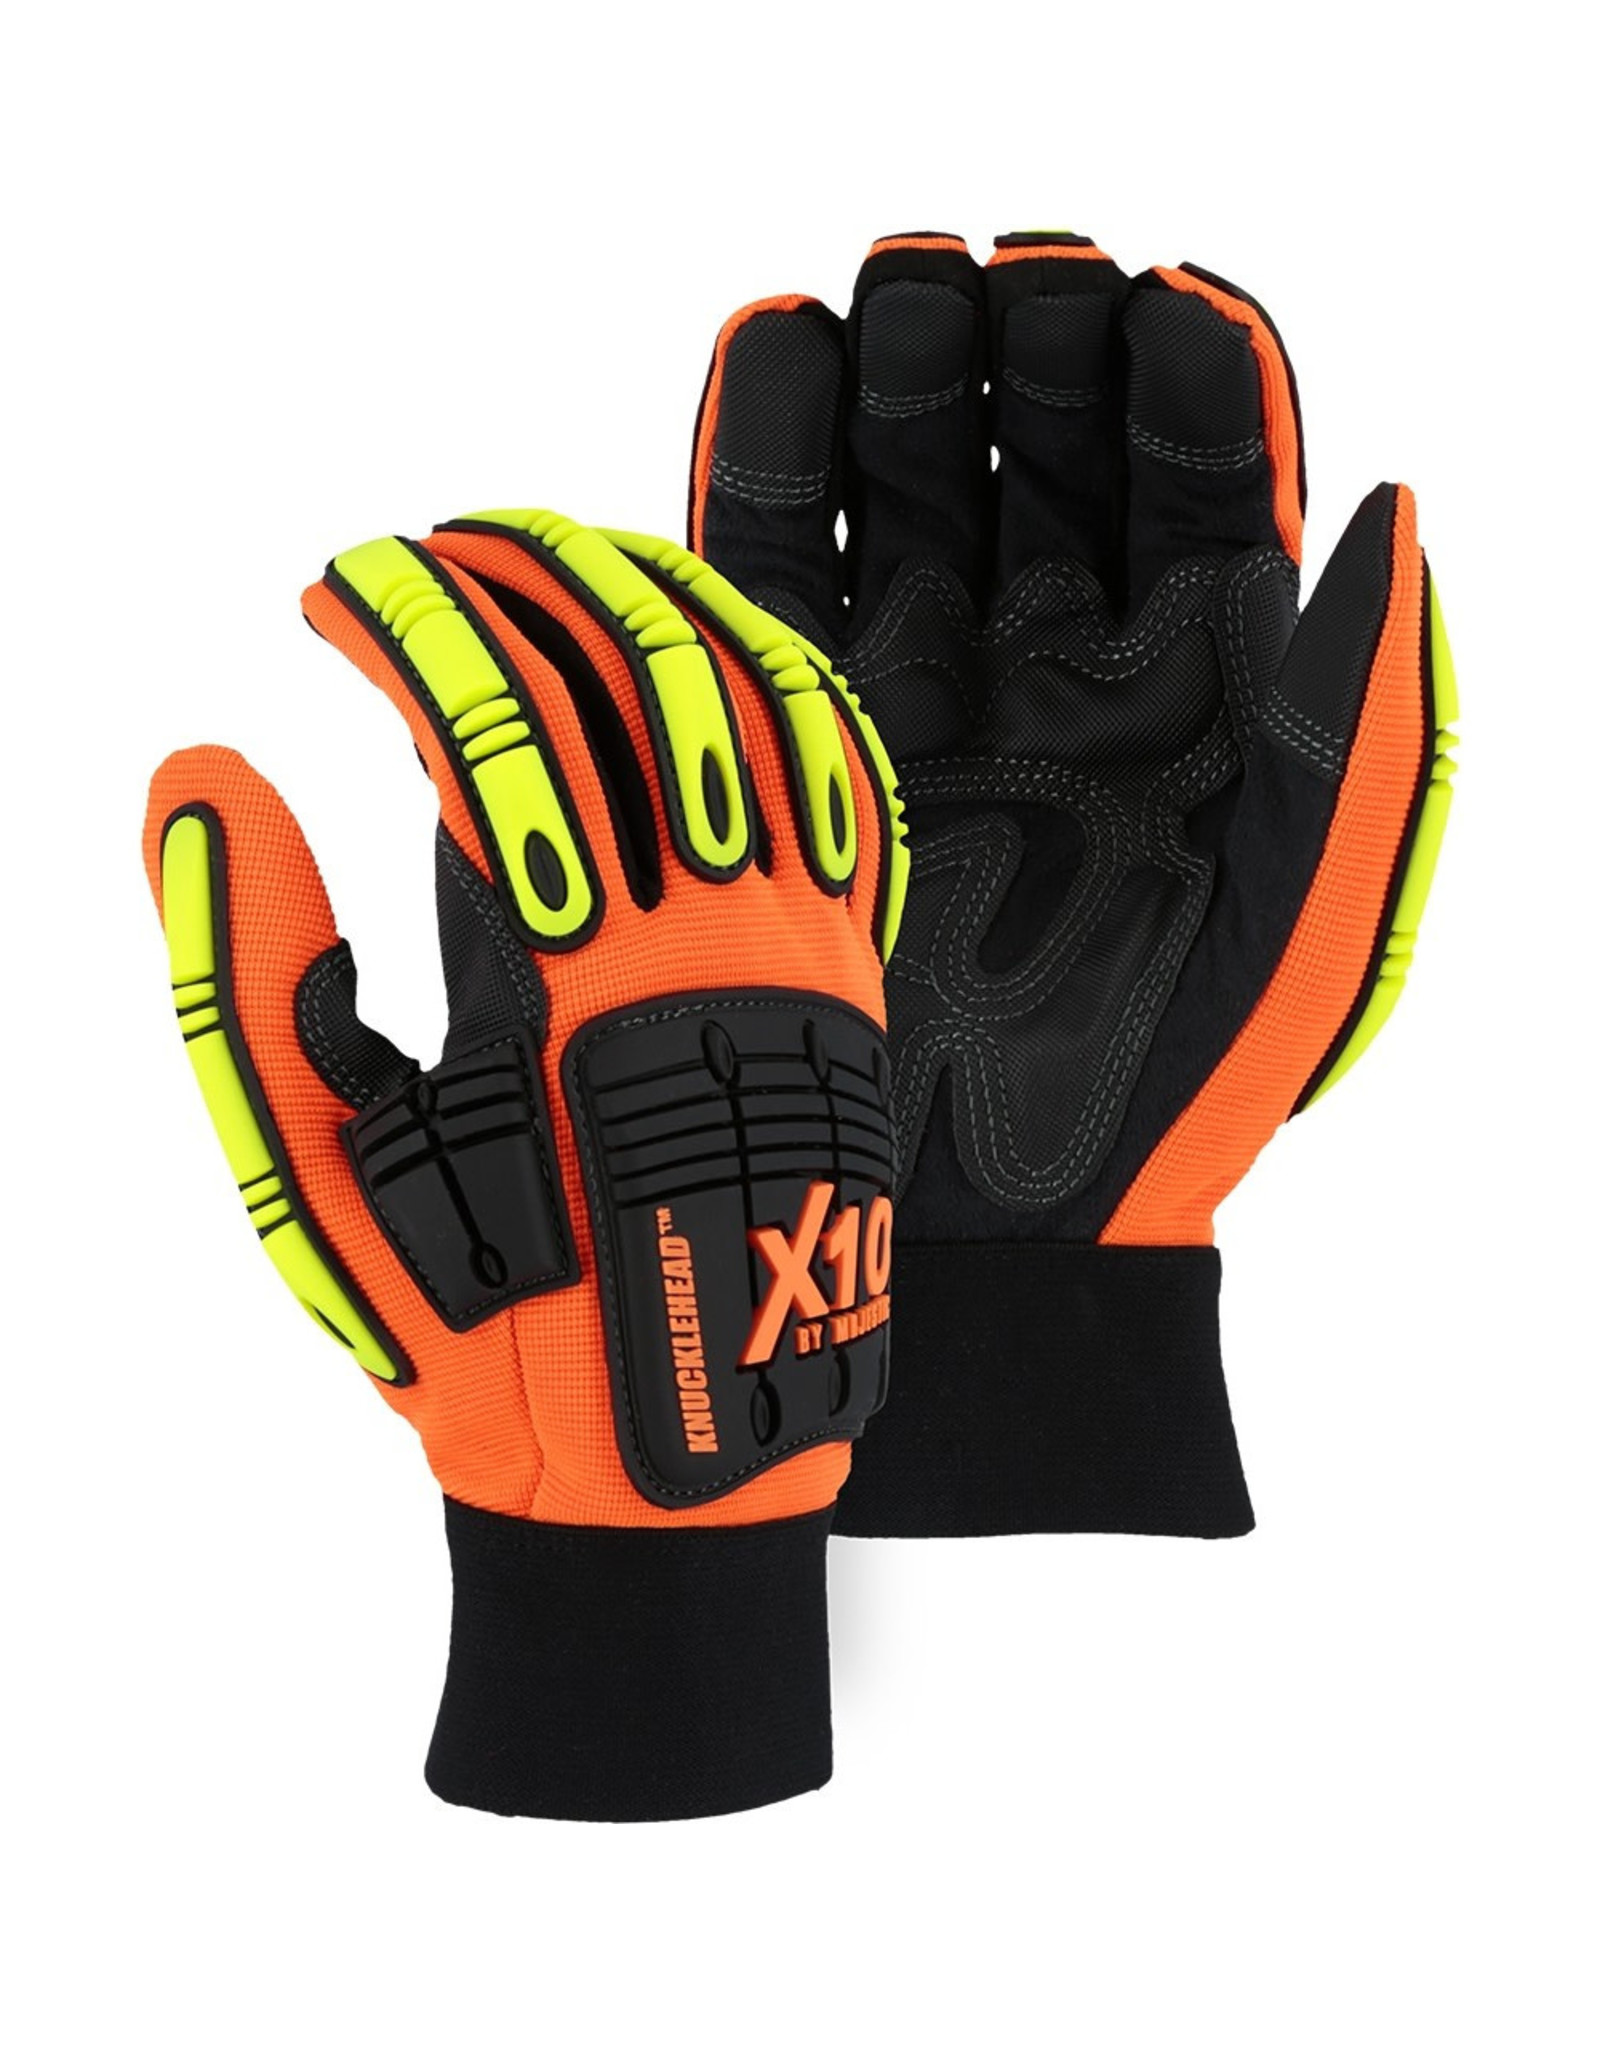 Majestic Glove Knucklehead X10 Armor Skin™ Mechanics Glove With Impact Protection - Single Pair